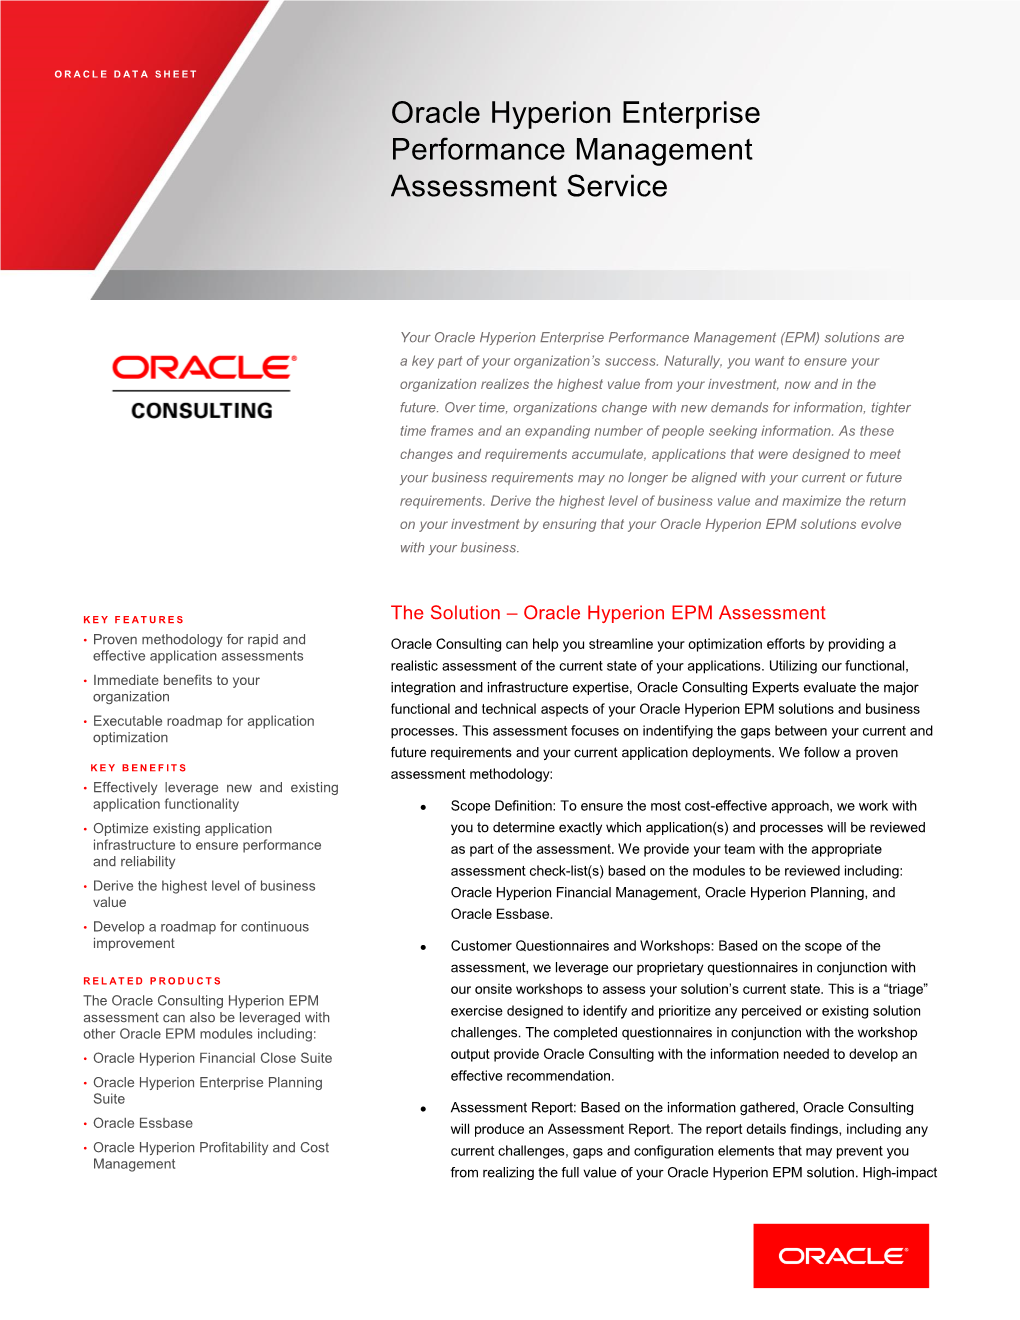 Oracle Hyperion Enterprise Performance Management Assessment Service